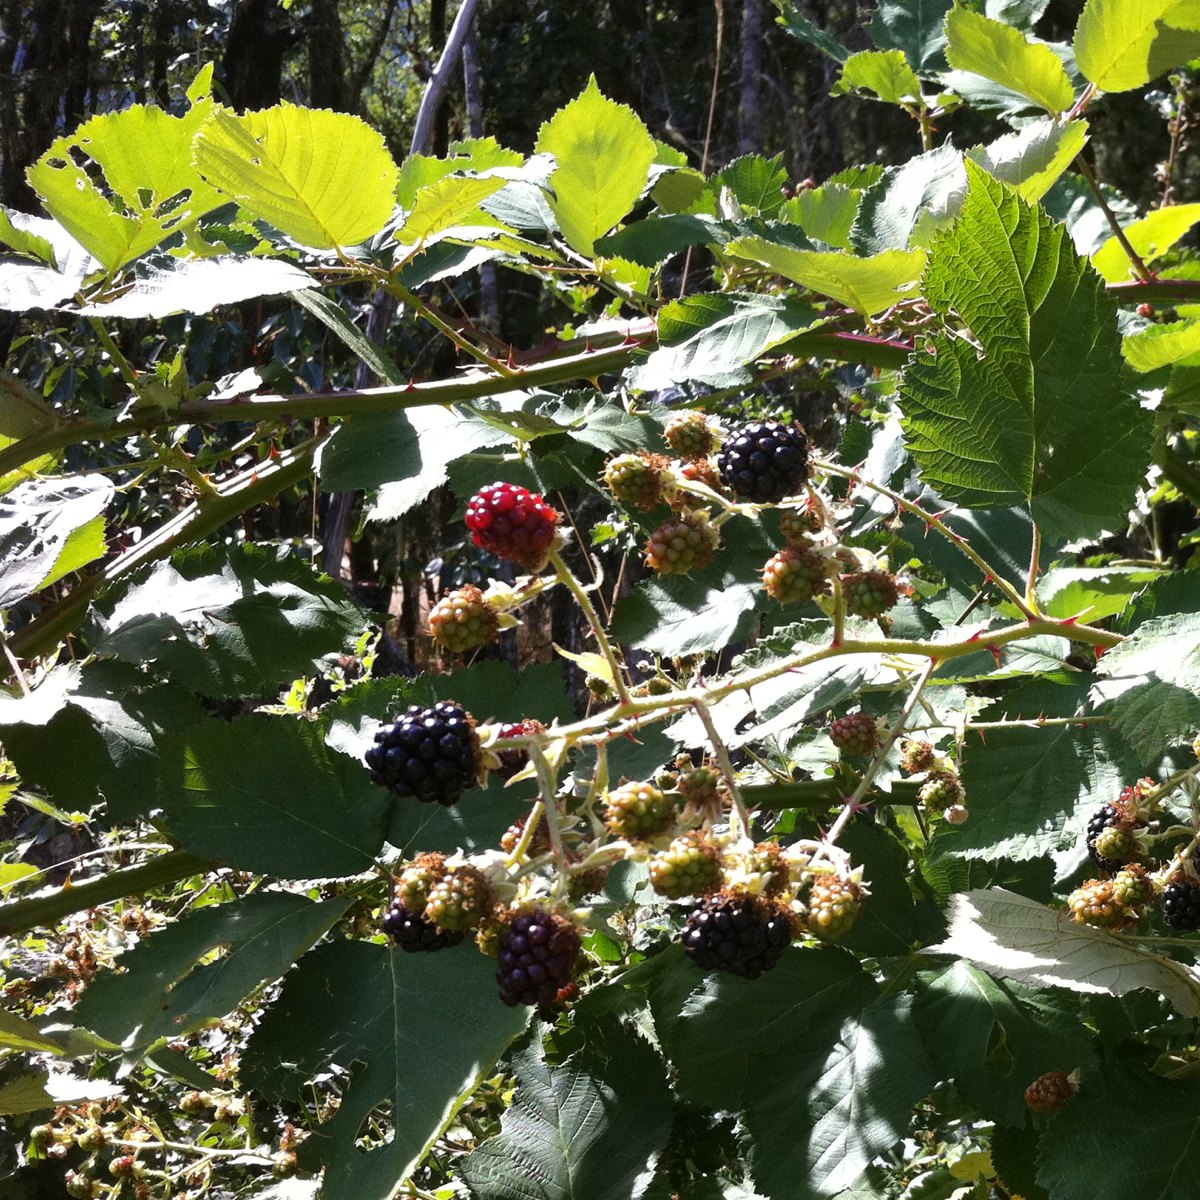 Himalaya blackberry